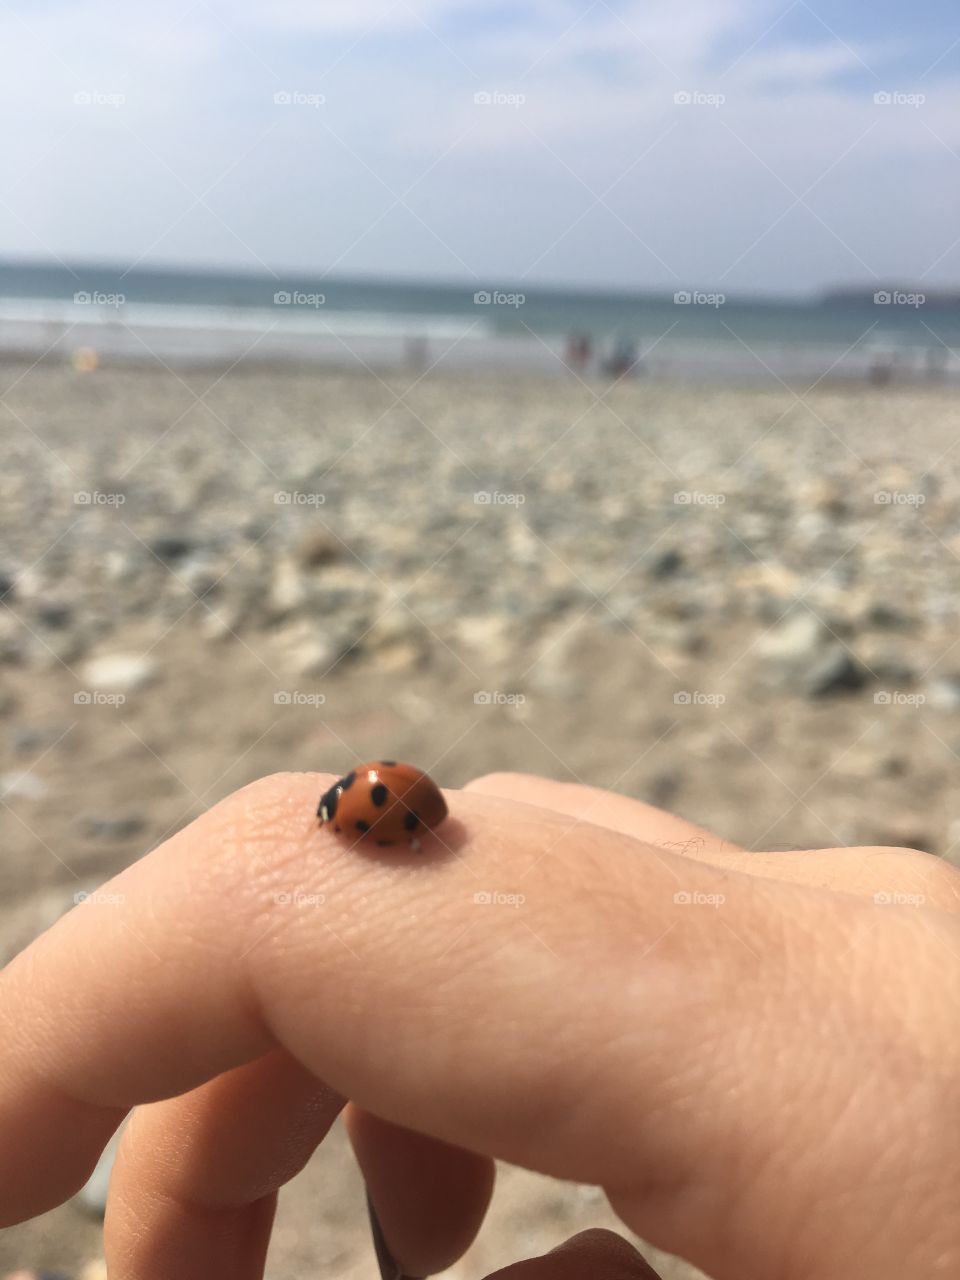 Ladybug at the beach in Ireland 